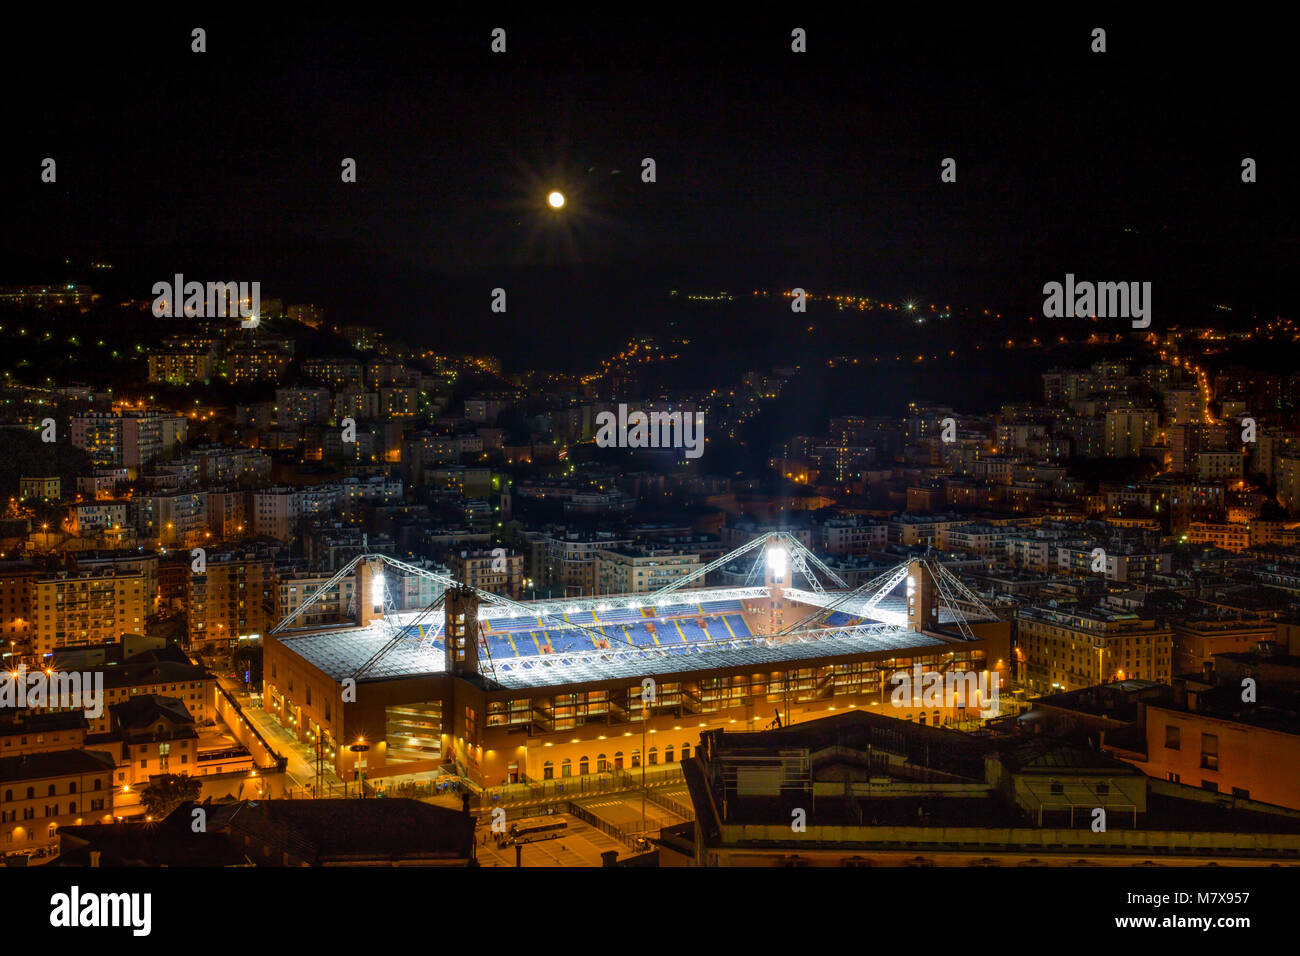 GENOA, ITALY - OCTOBER 29, 2015 - Aerial view of the football stadium' Luigi Ferraris' of Genoa by night. Stock Photo